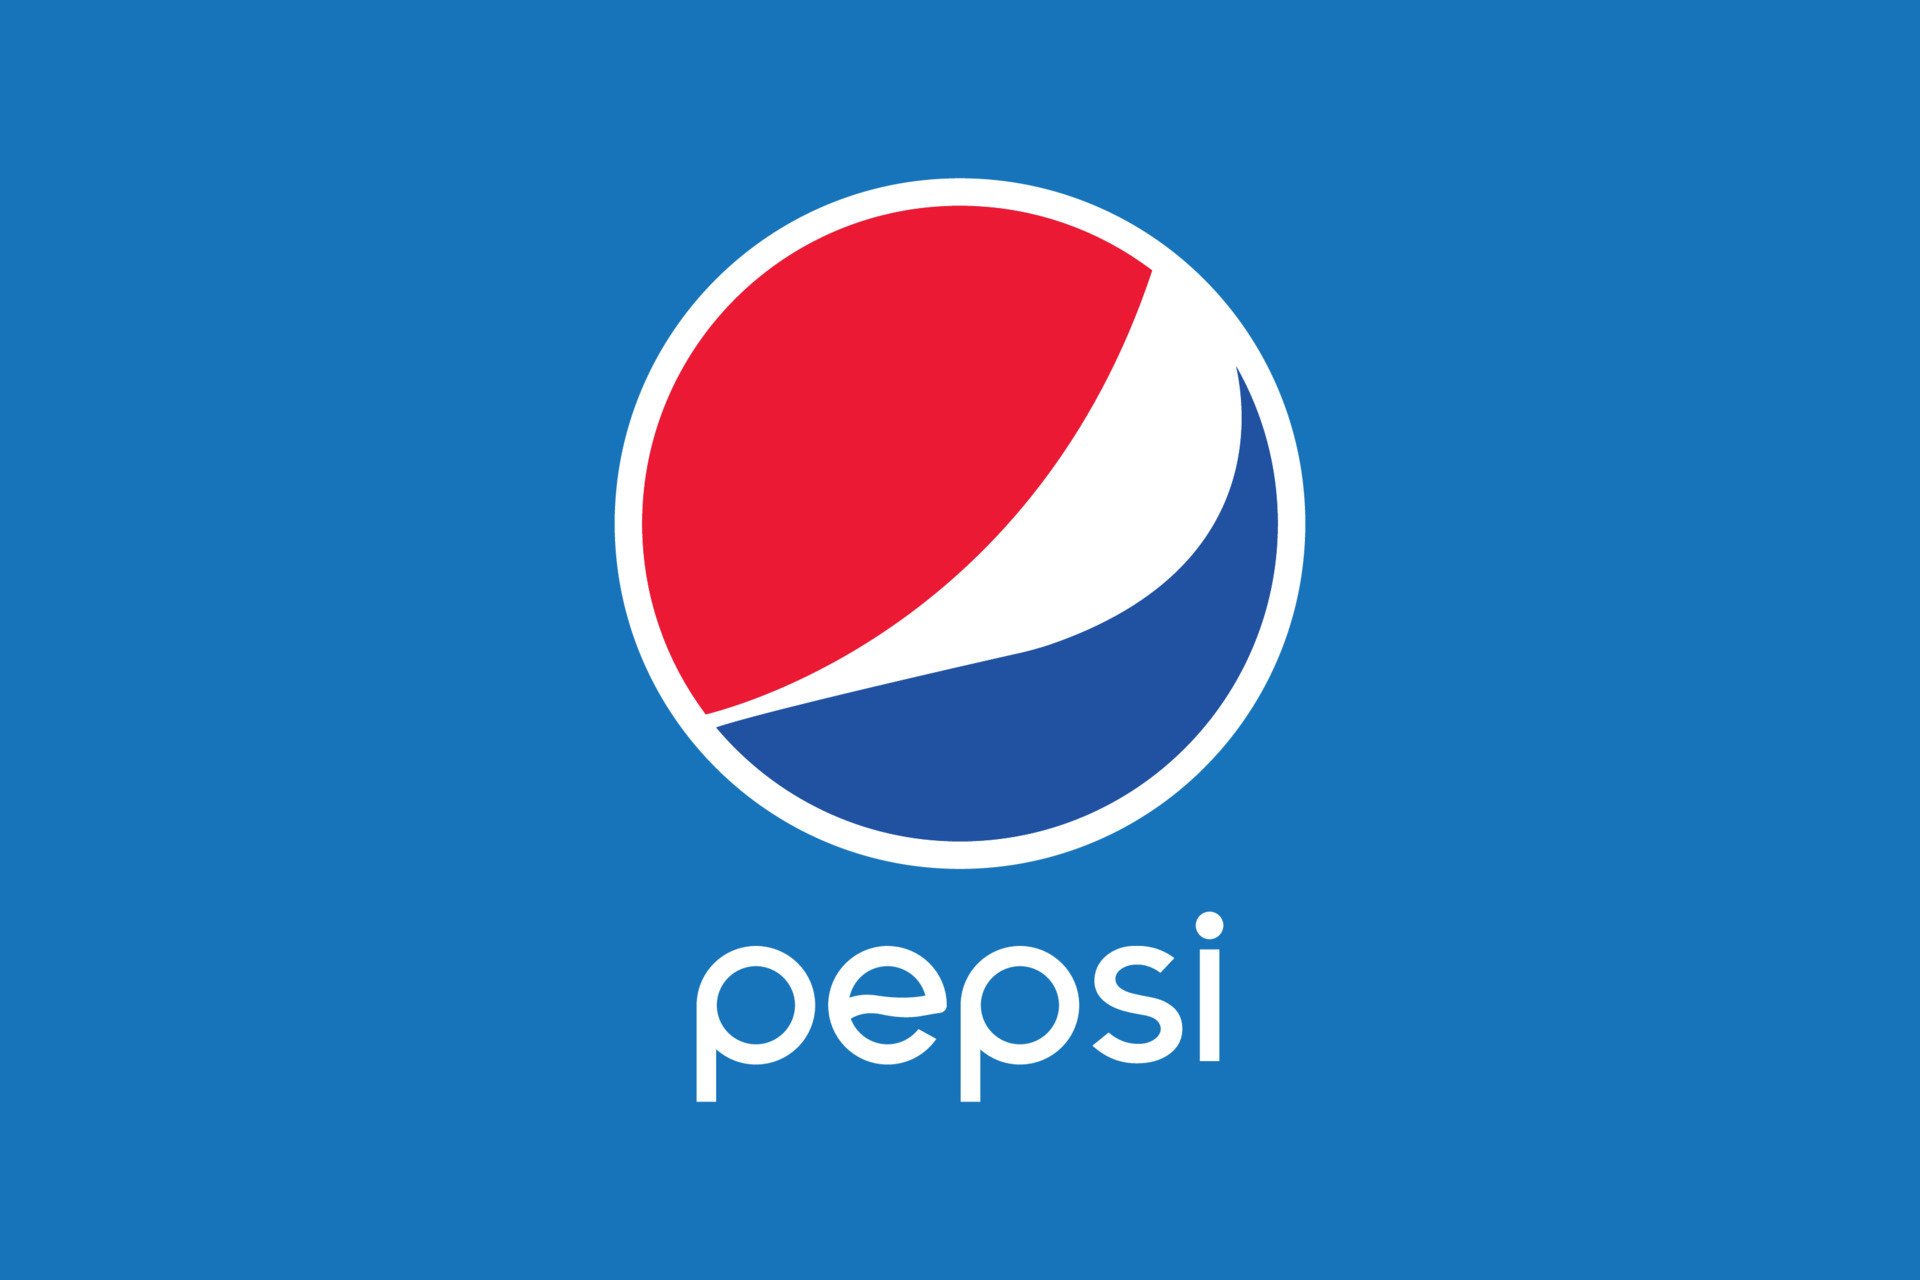 pepsi-popular-drink-brand-logo-vinnytsia-ukraine-may-16-202-free-vector.jpg